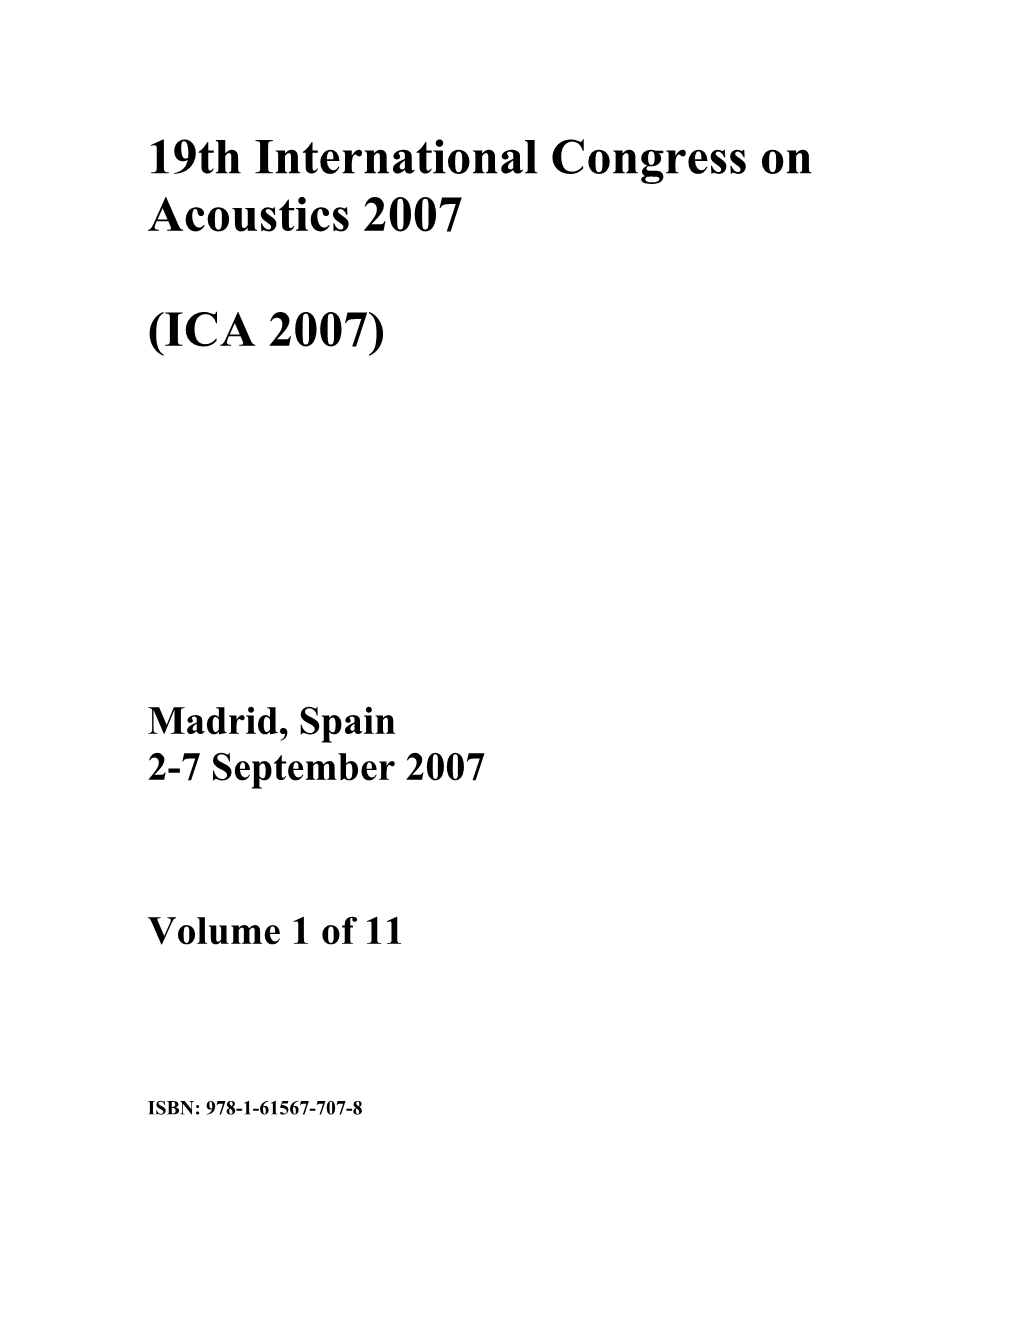 19Th International Congress on Acoustics 2007